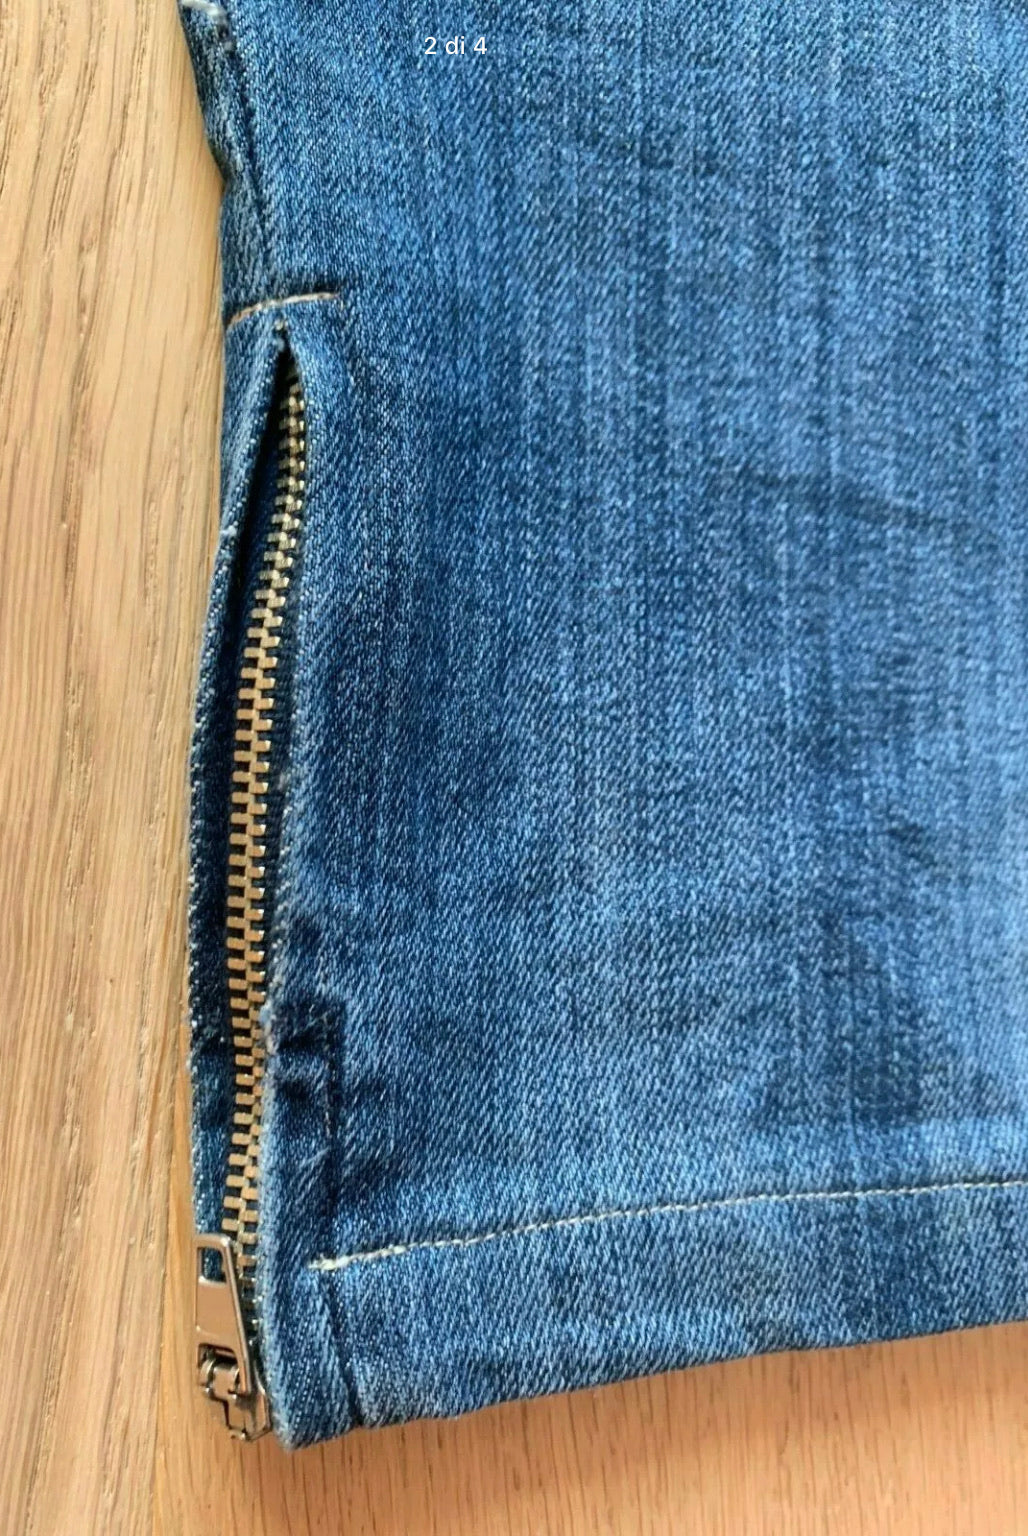 SCEE TWIN-SET By Simona Barbieri jeans donna TG. 29 S/M 42-44